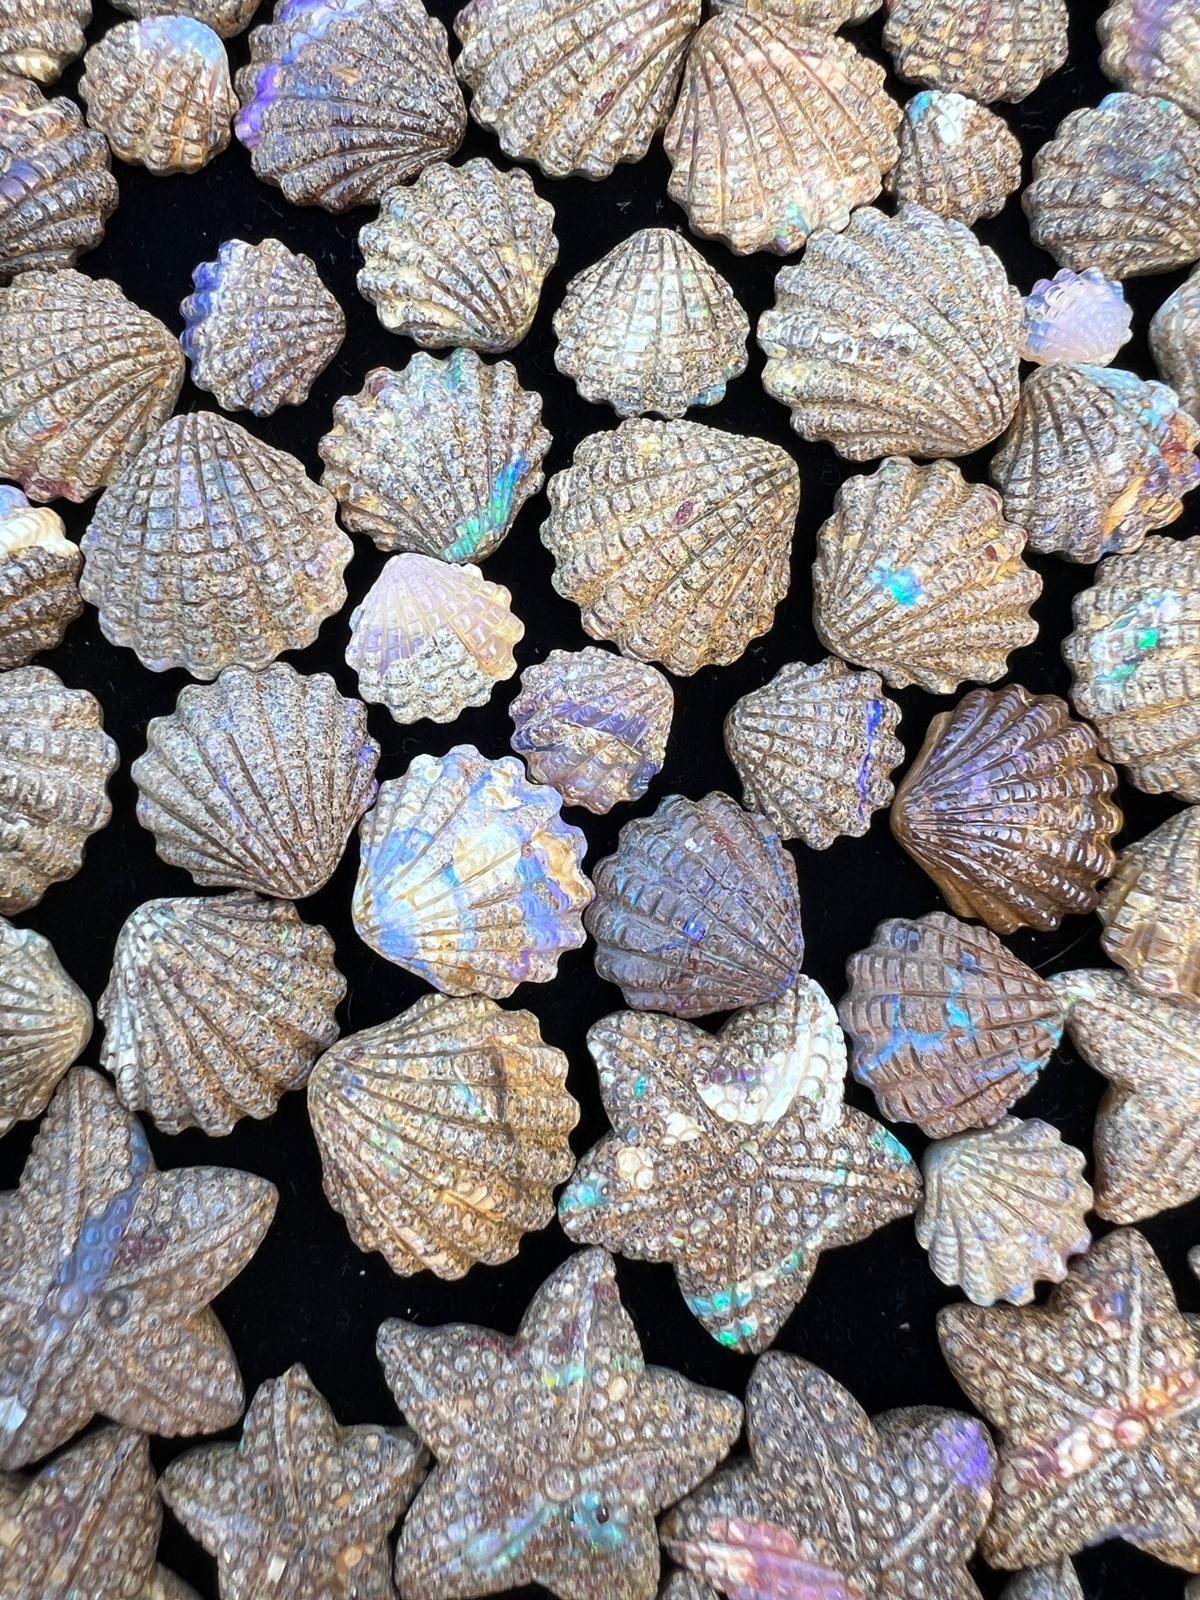 Exquisite 16.75 Ct Australian Boulder Opal Matrix Scallop Shell Carving